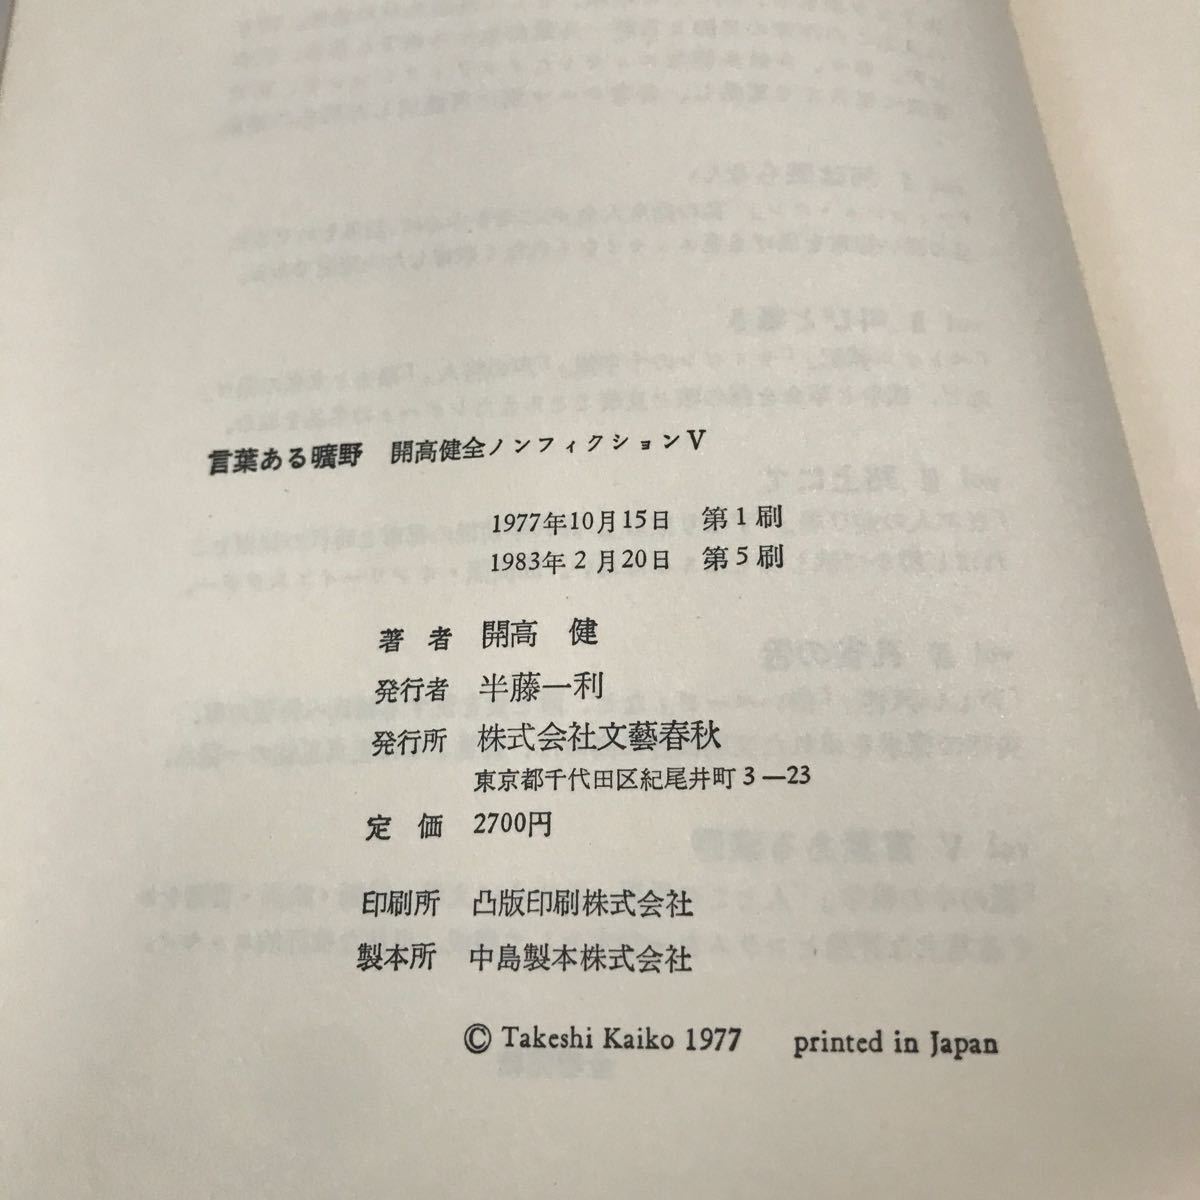 E06* слова есть .. Kaikou Takeshi все научная литература vol.V документ . человек .1983 год 2 месяц выпуск Kaikou Takeshi / работа Bungeishunju фирма с поясом оби *240118